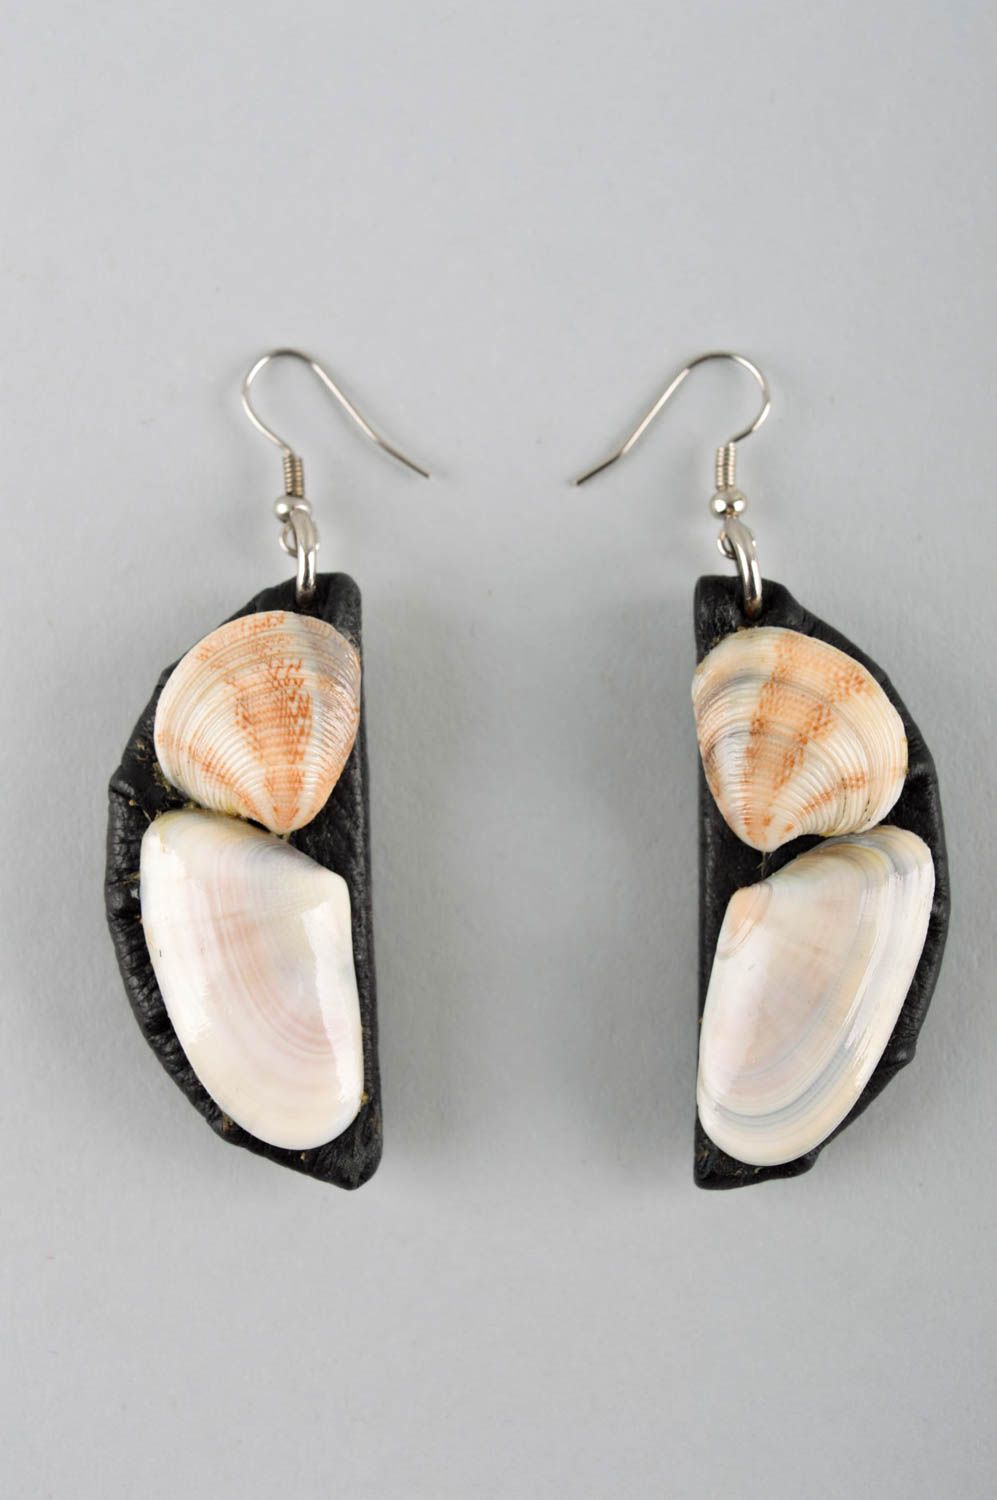 Handmade wooden earrings leather earrings in marine style jewelry designs  photo 3